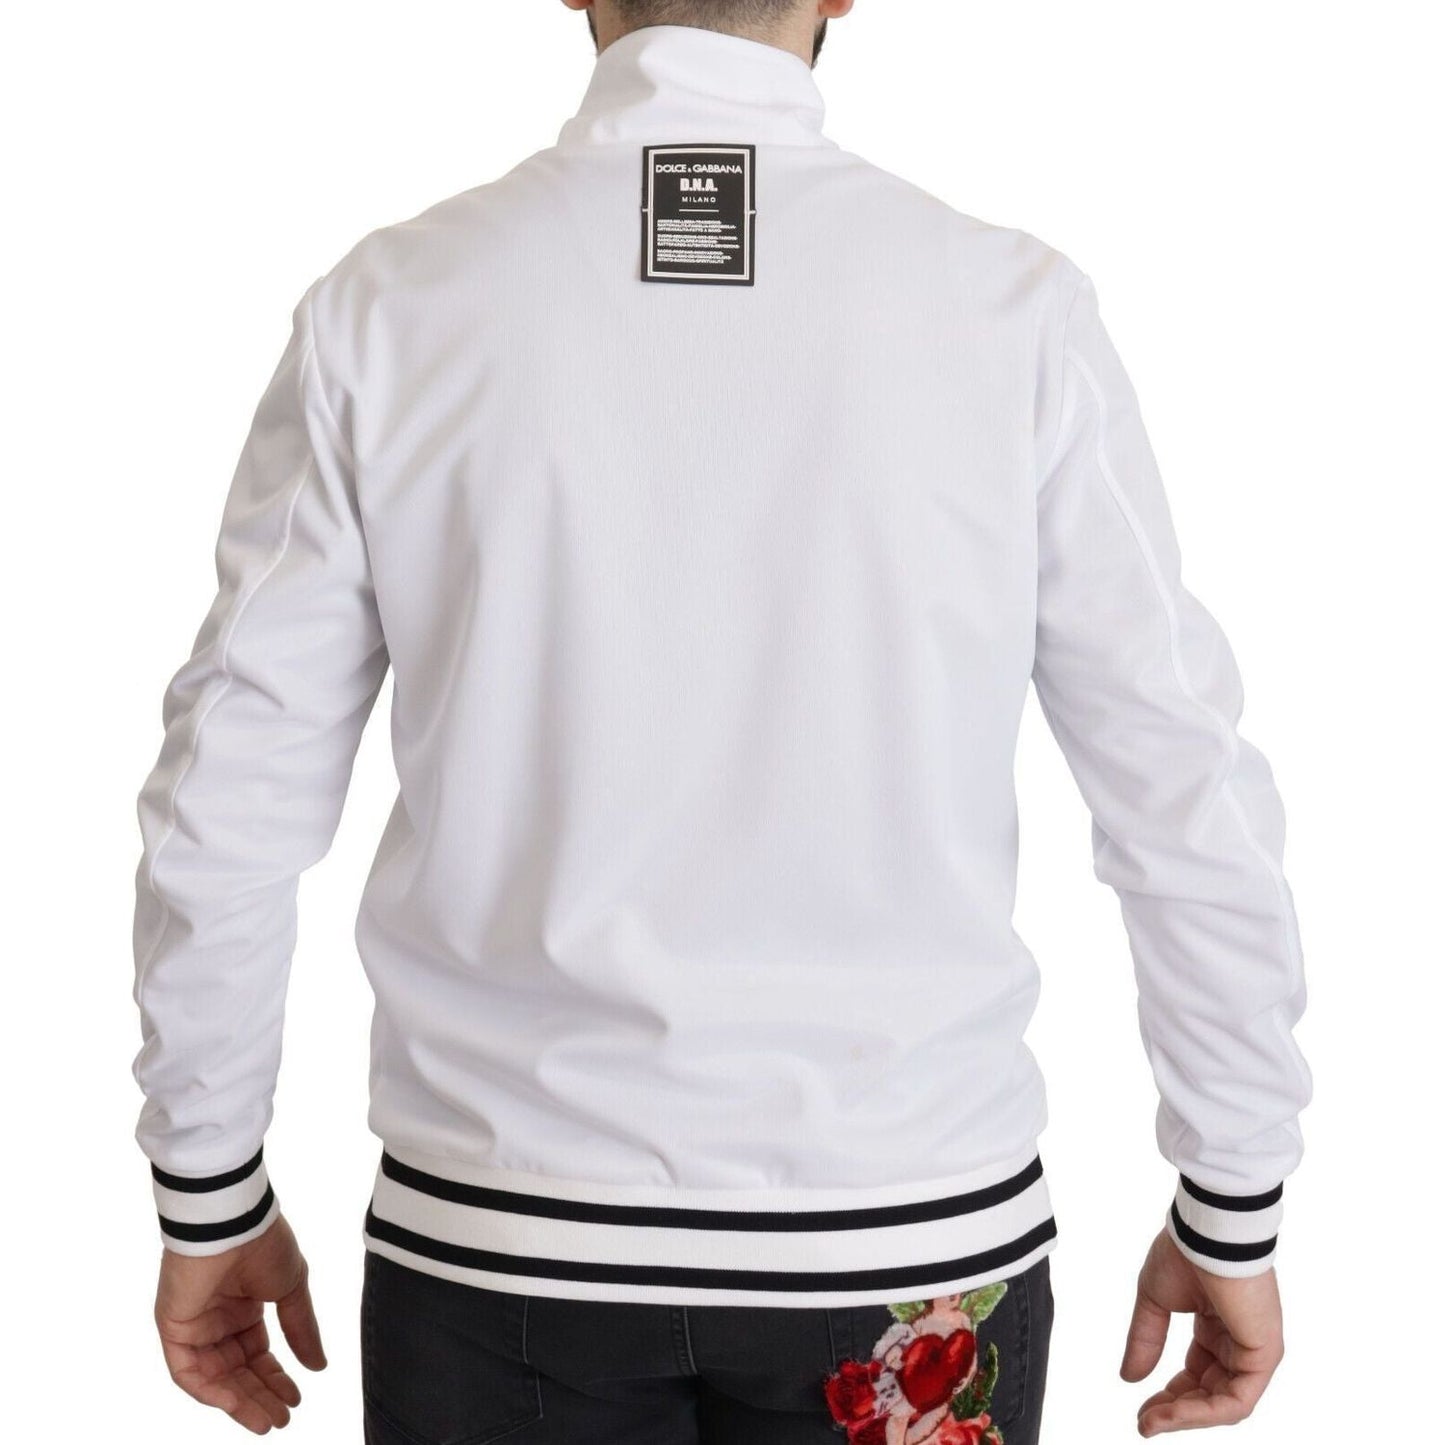 Dolce & Gabbana Sleek White Zip Sweater for Men white-dg-d-n-a-zipper-stretch-sweater s-l1600-32-3-d0a775c2-11a.jpg